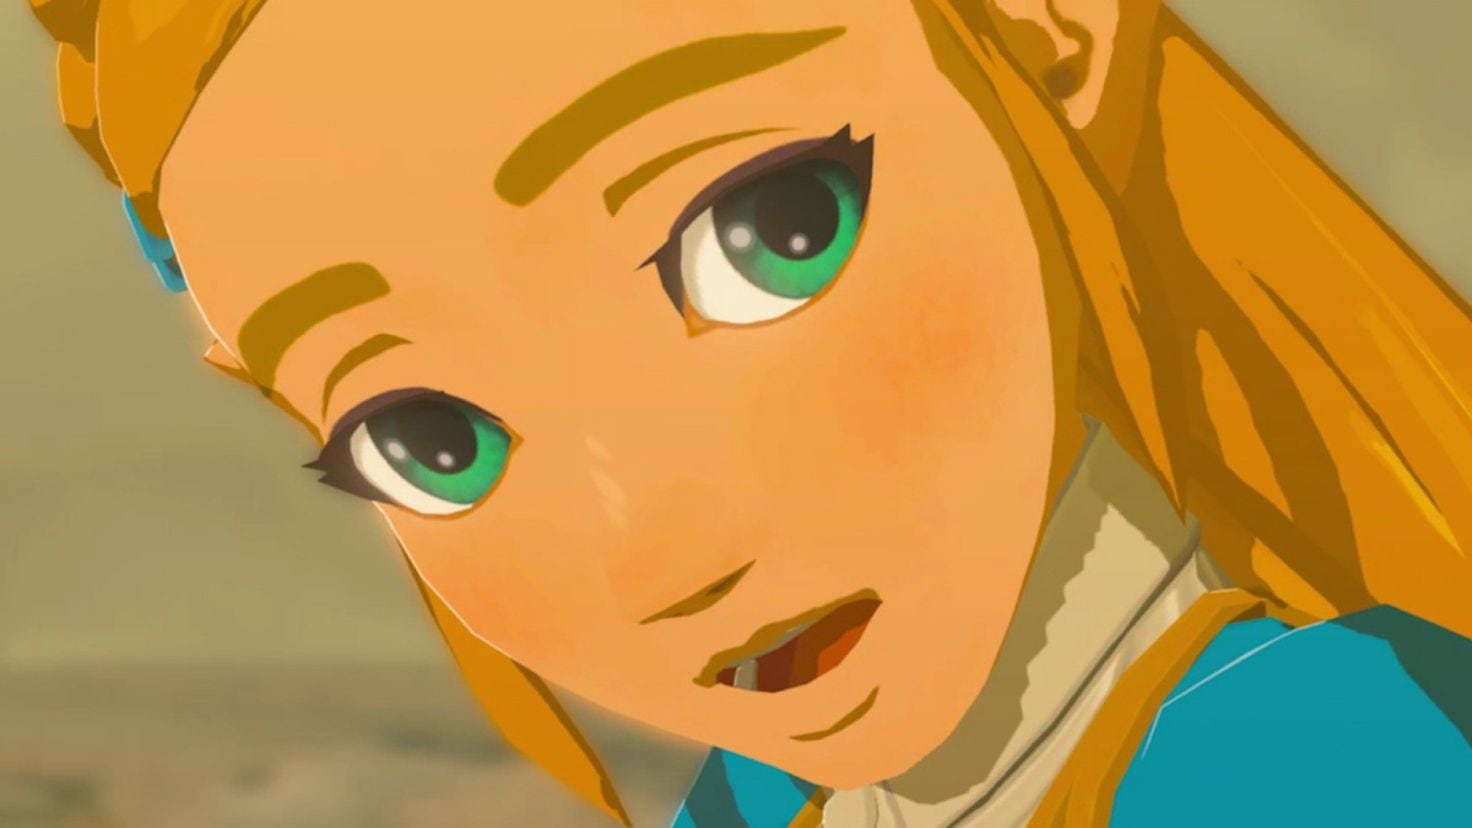 Nintendo of America on X: The Legend of #Zelda: Breath of the